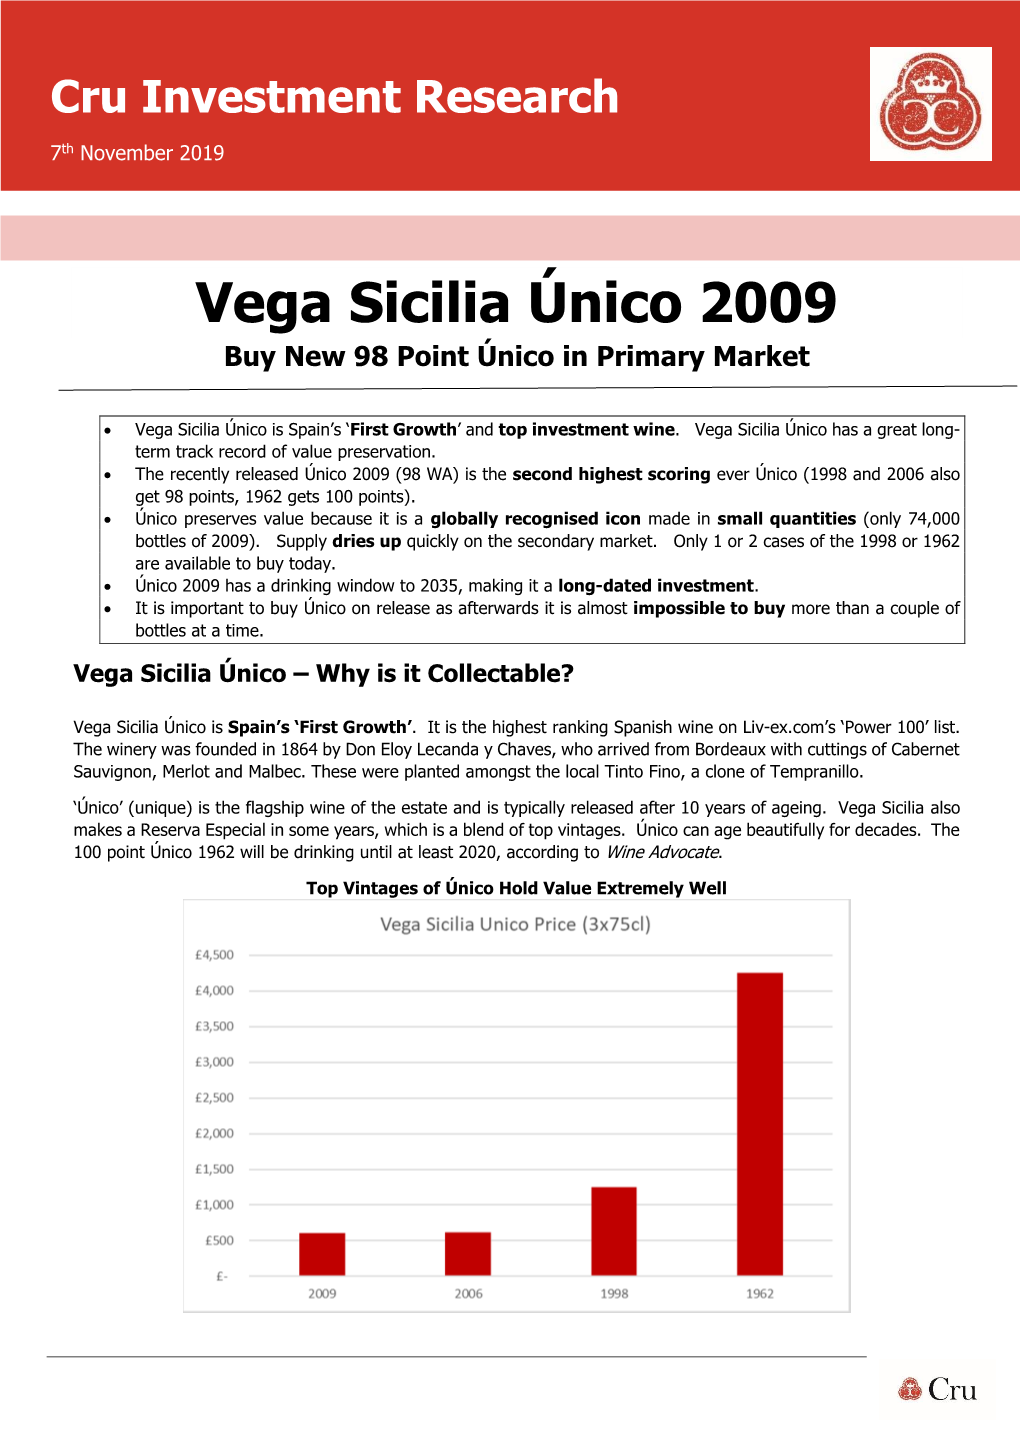 Vega Sicilia Único 2009 Buy New 98 Point Único in Primary Market